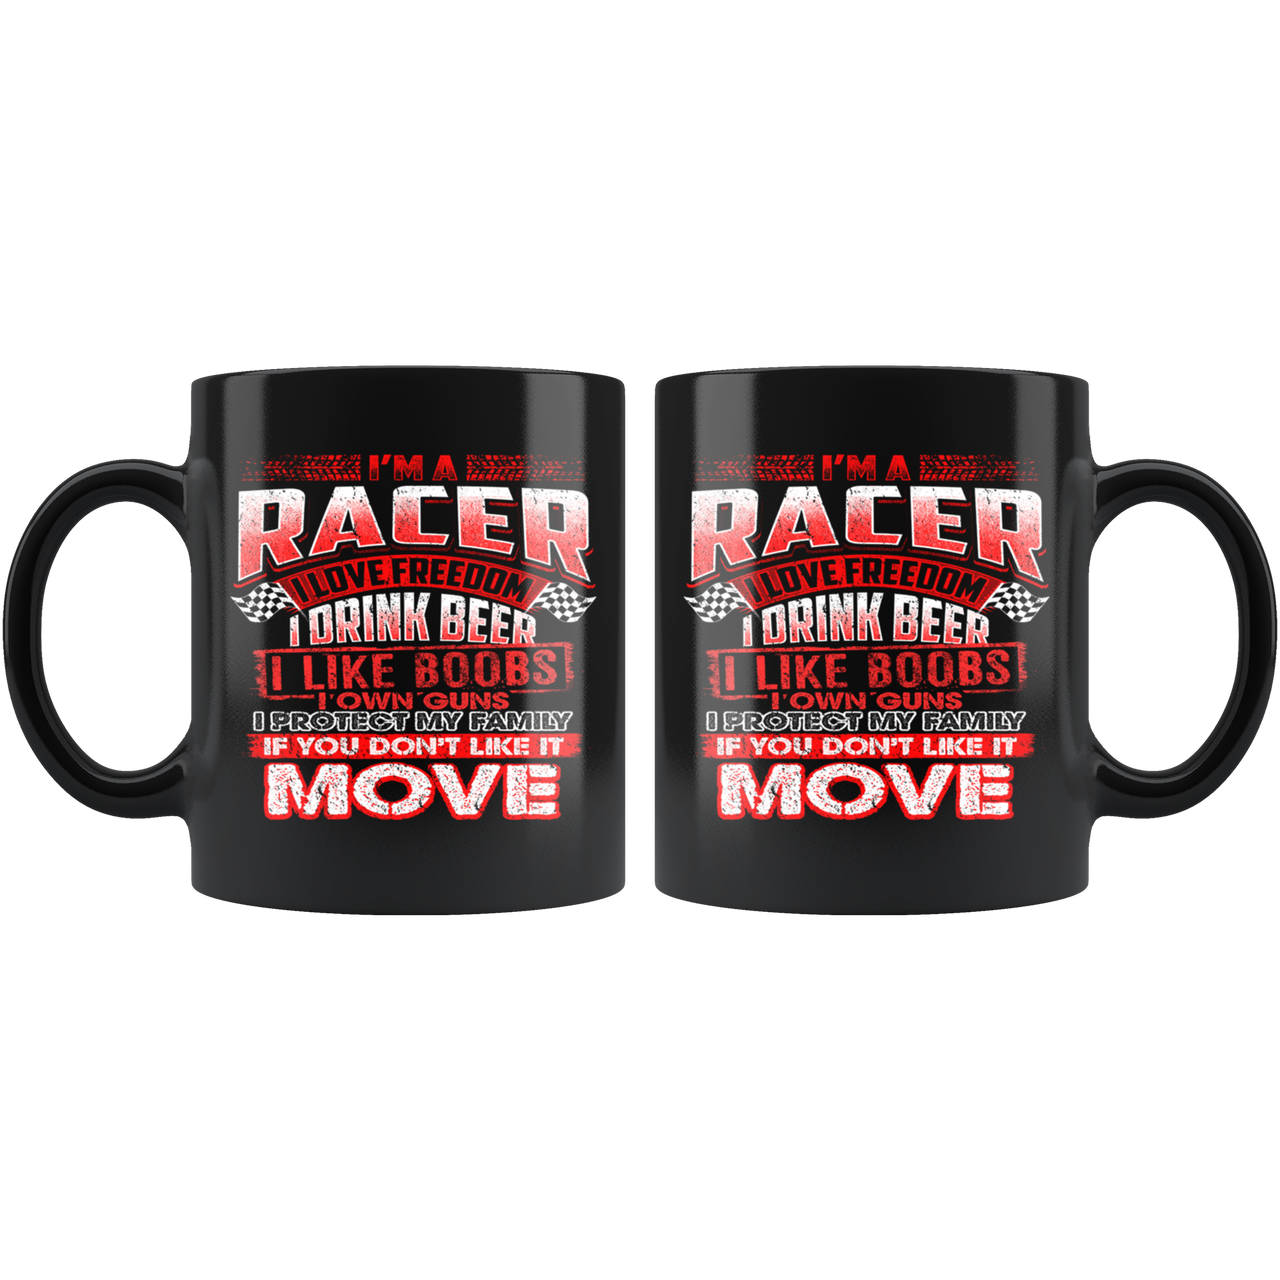 I'm A Racer I Love Freedom I Drink Beer I Love Boobs Mug!